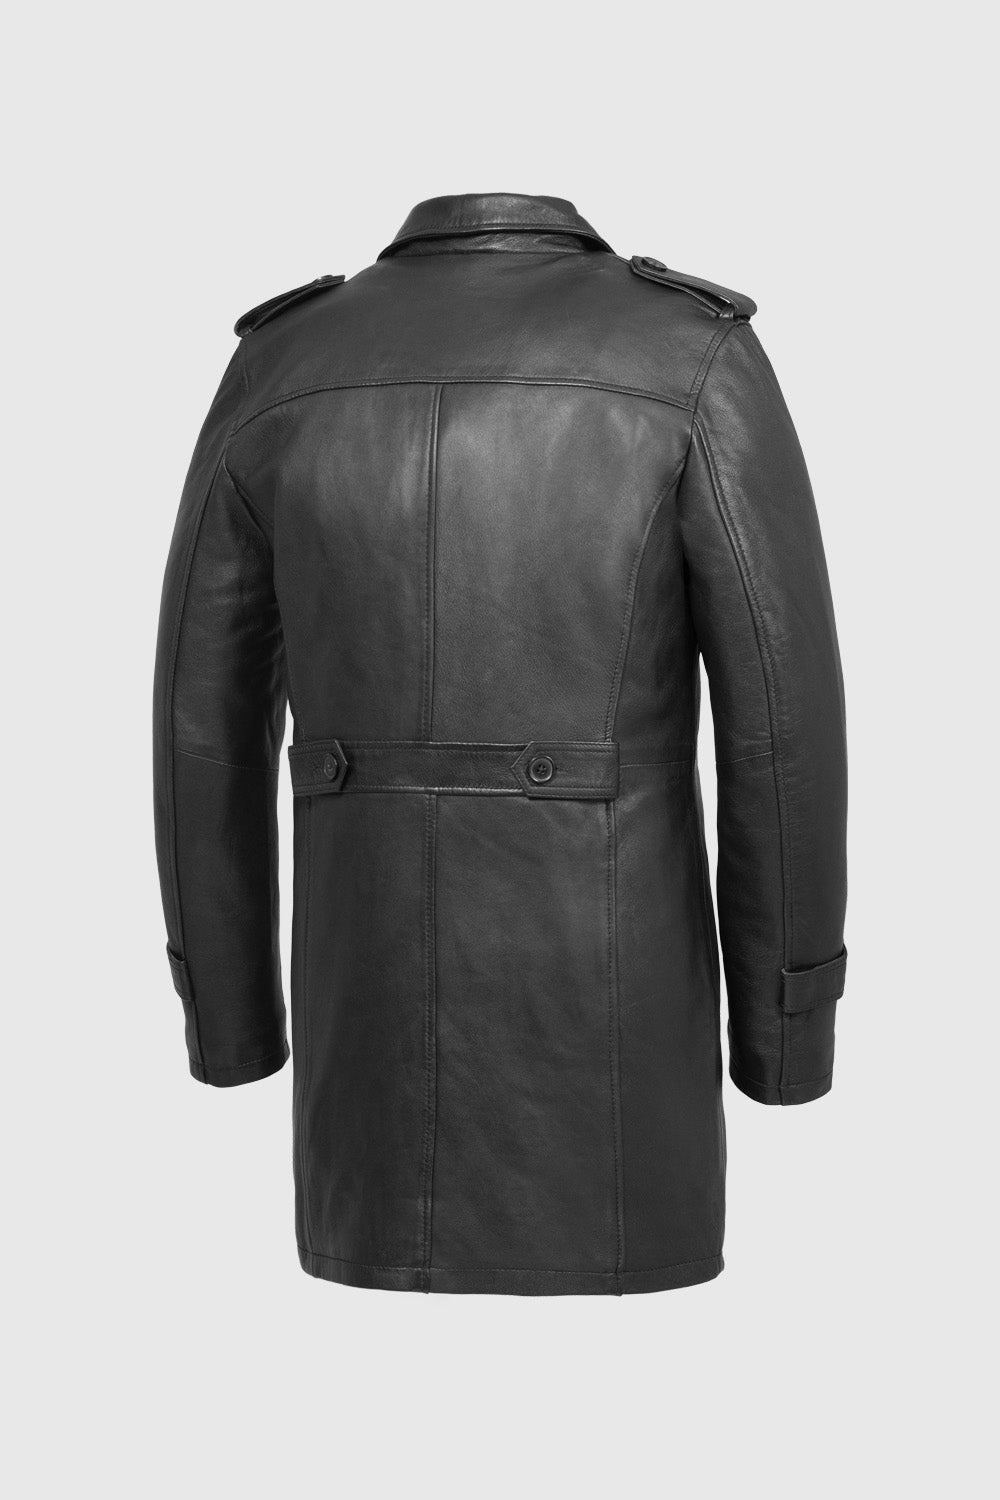 Mens Winter Trench Coat Long Jacket Lapel Neck Outwear Single Breasted  Overco | eBay